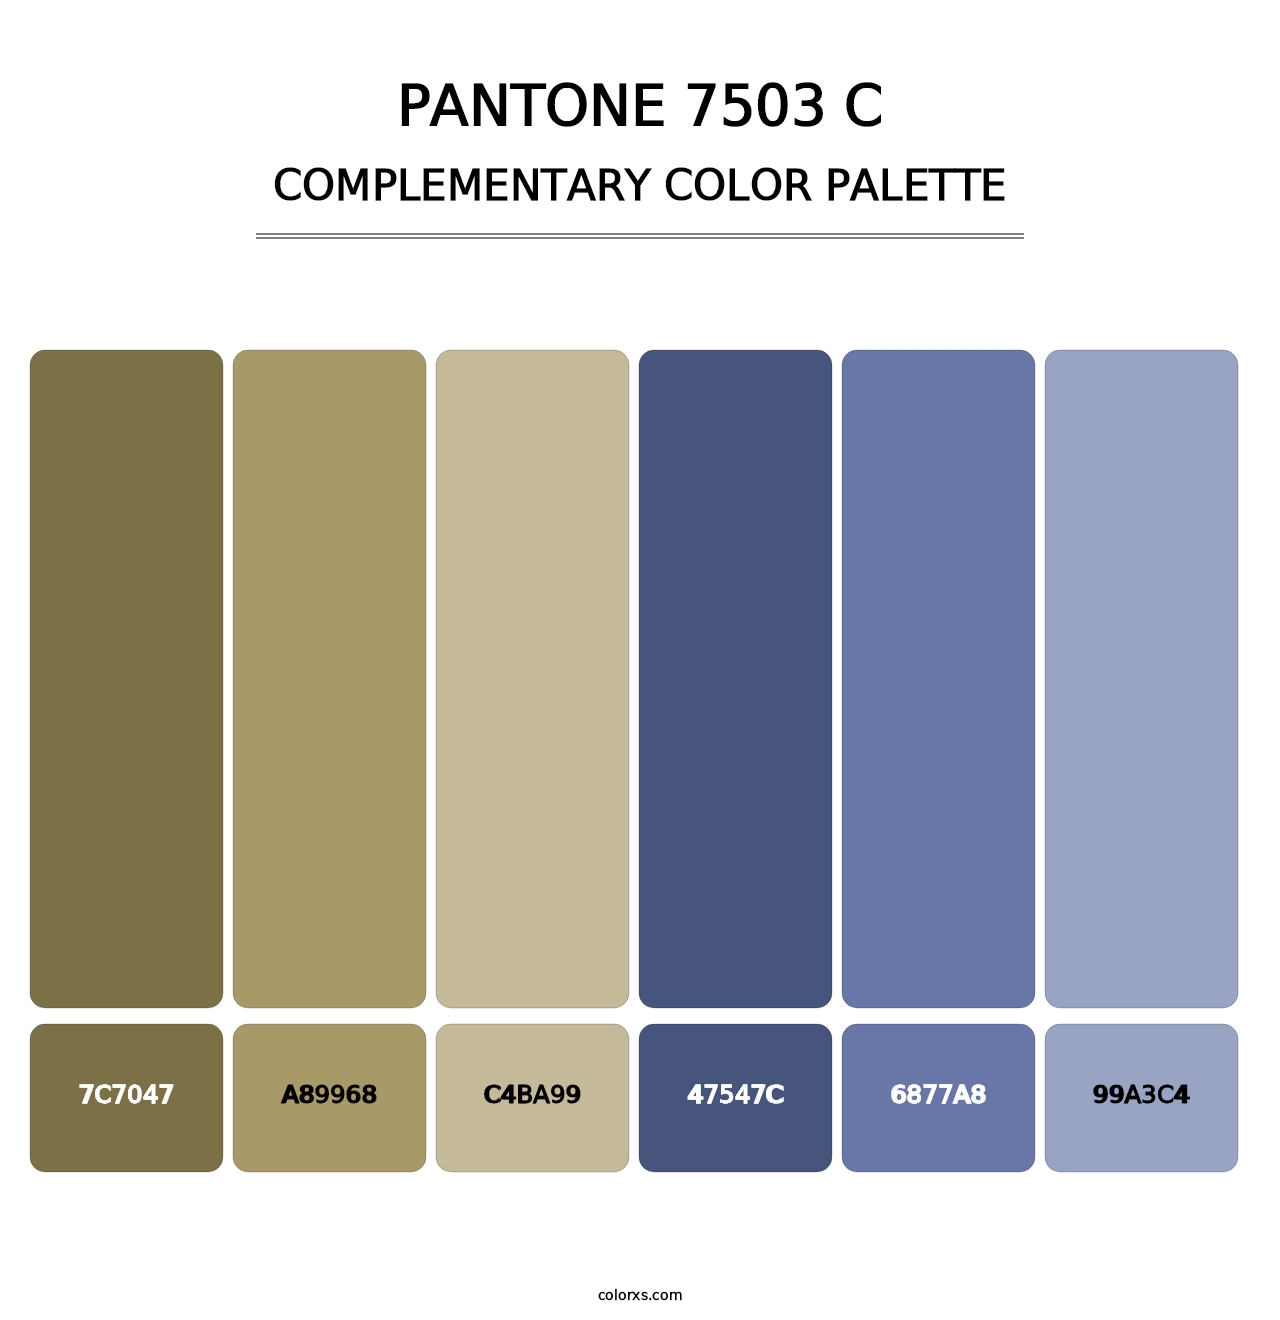 PANTONE 7503 C - Complementary Color Palette